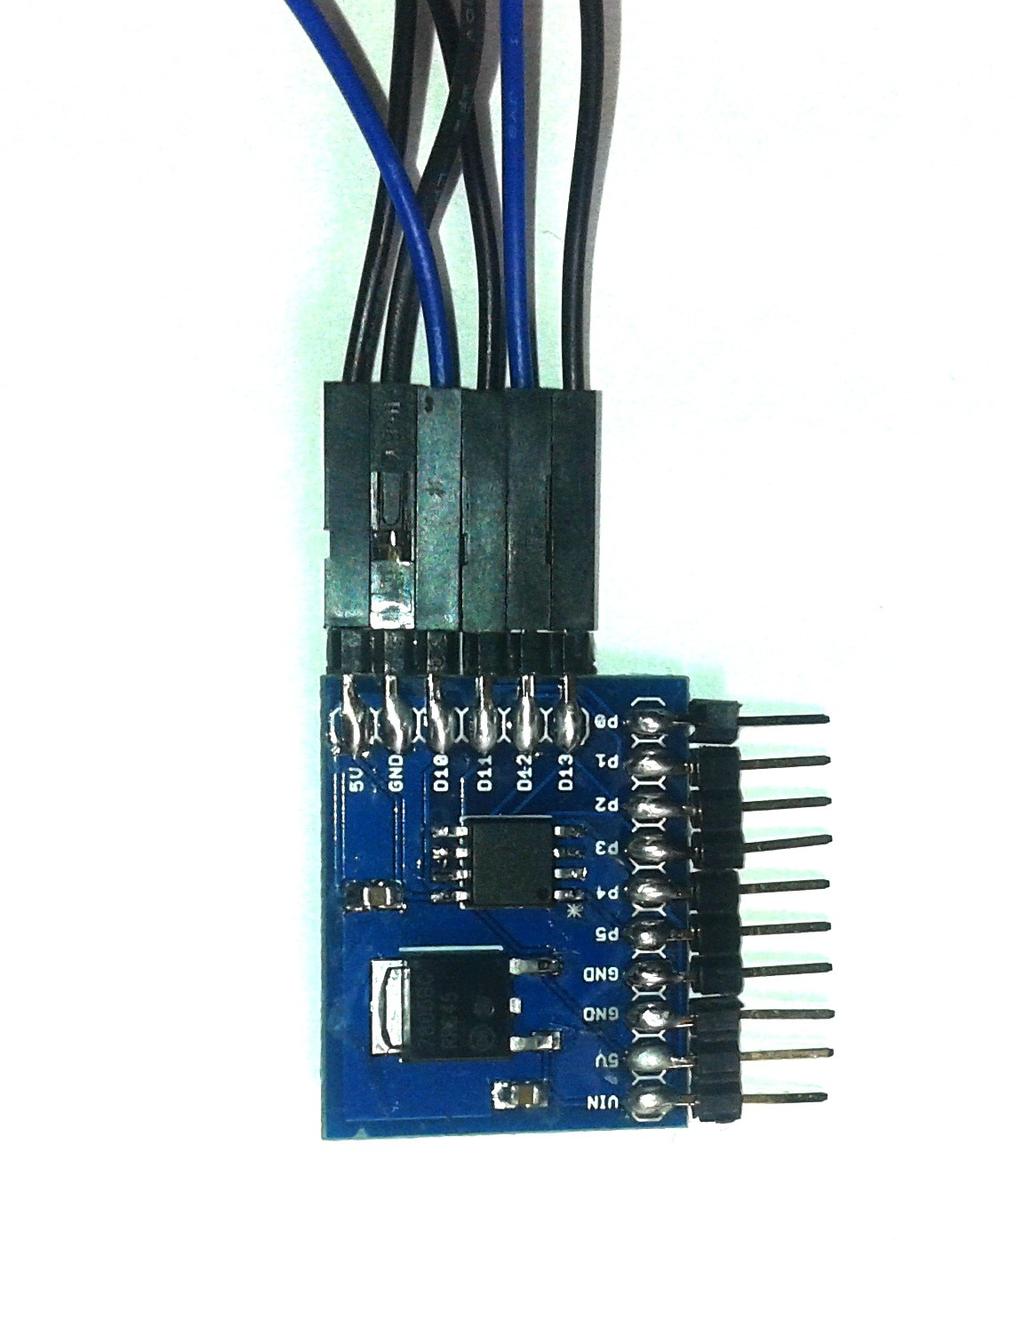 Reduino Pro Tiny pin 5V Arduino pin 5V Reduino Pro Tiny pin GND Arduino pin GND Reduino Pro Tiny pin D10 Arduino pin D10 Reduino Pro Tiny pin